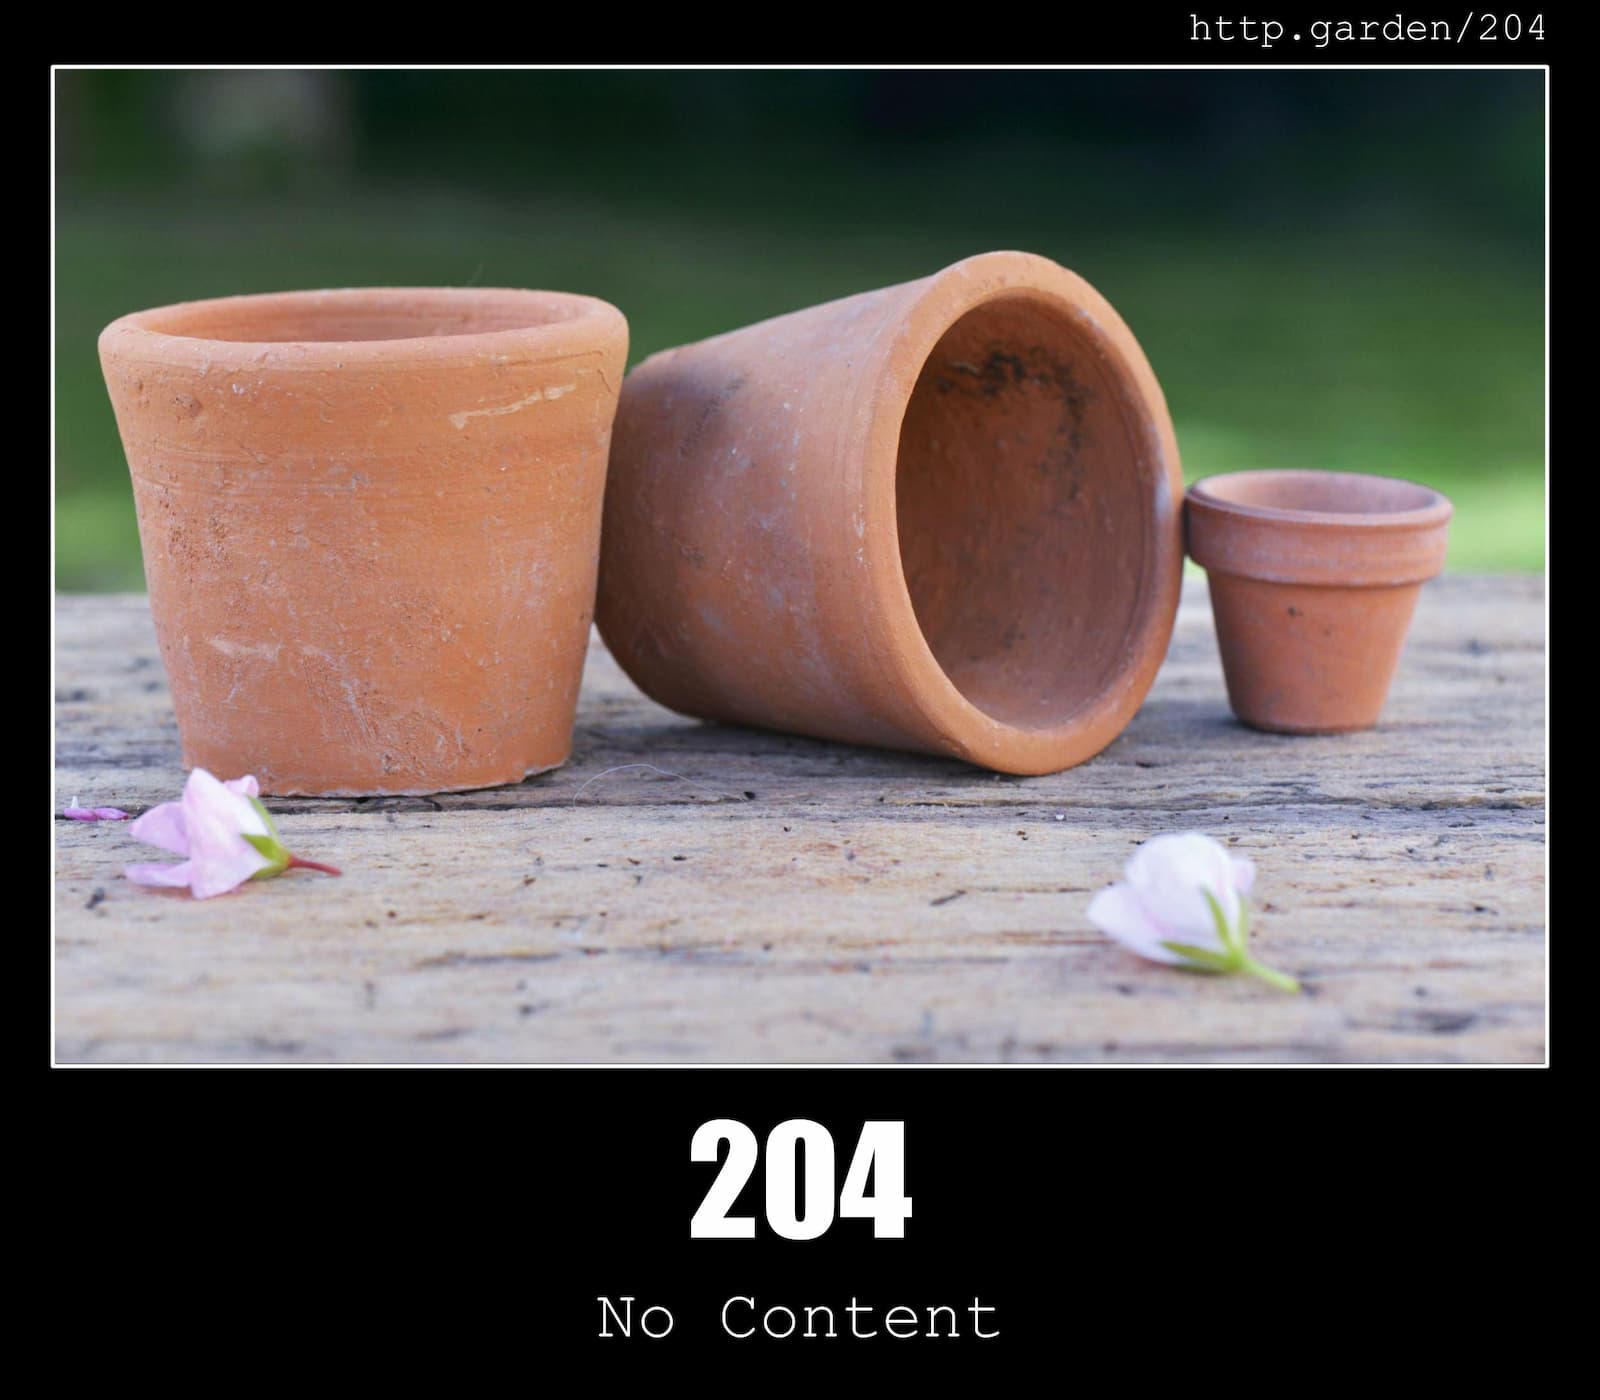 HTTP Status Code 204 No Content & Gardening